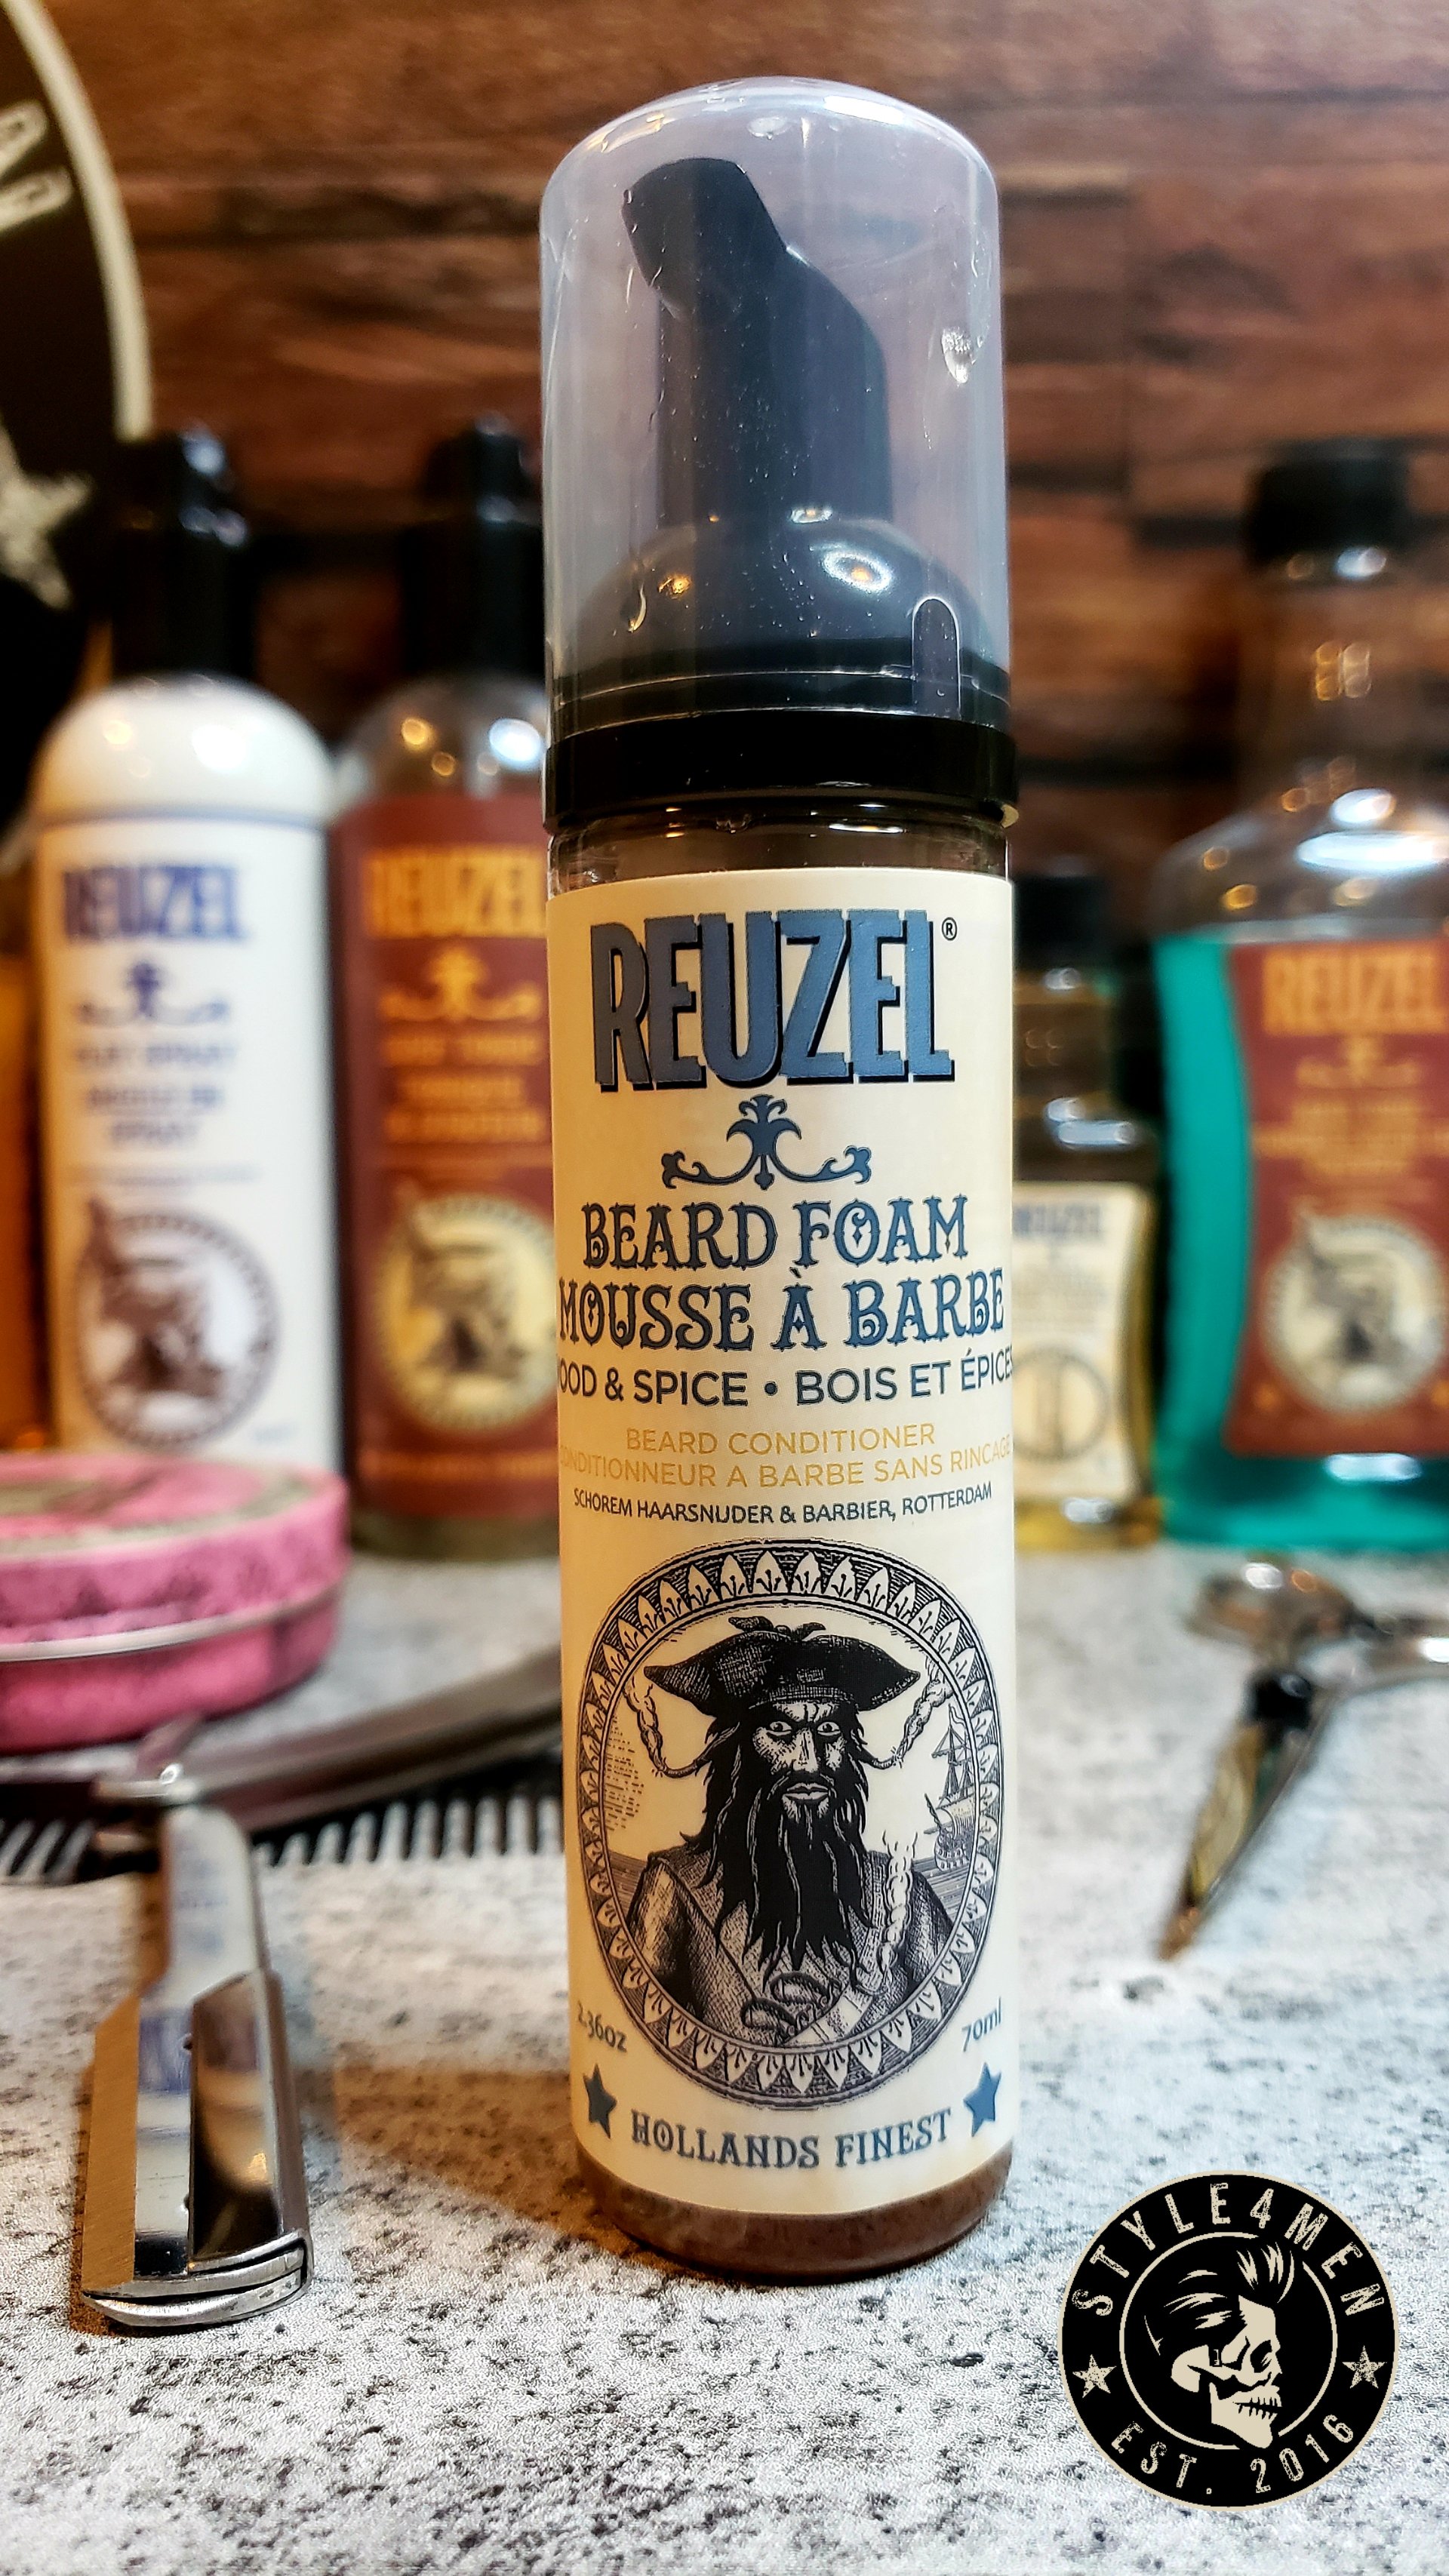 REUZEL’s Beard Foam – The convenience that was missing